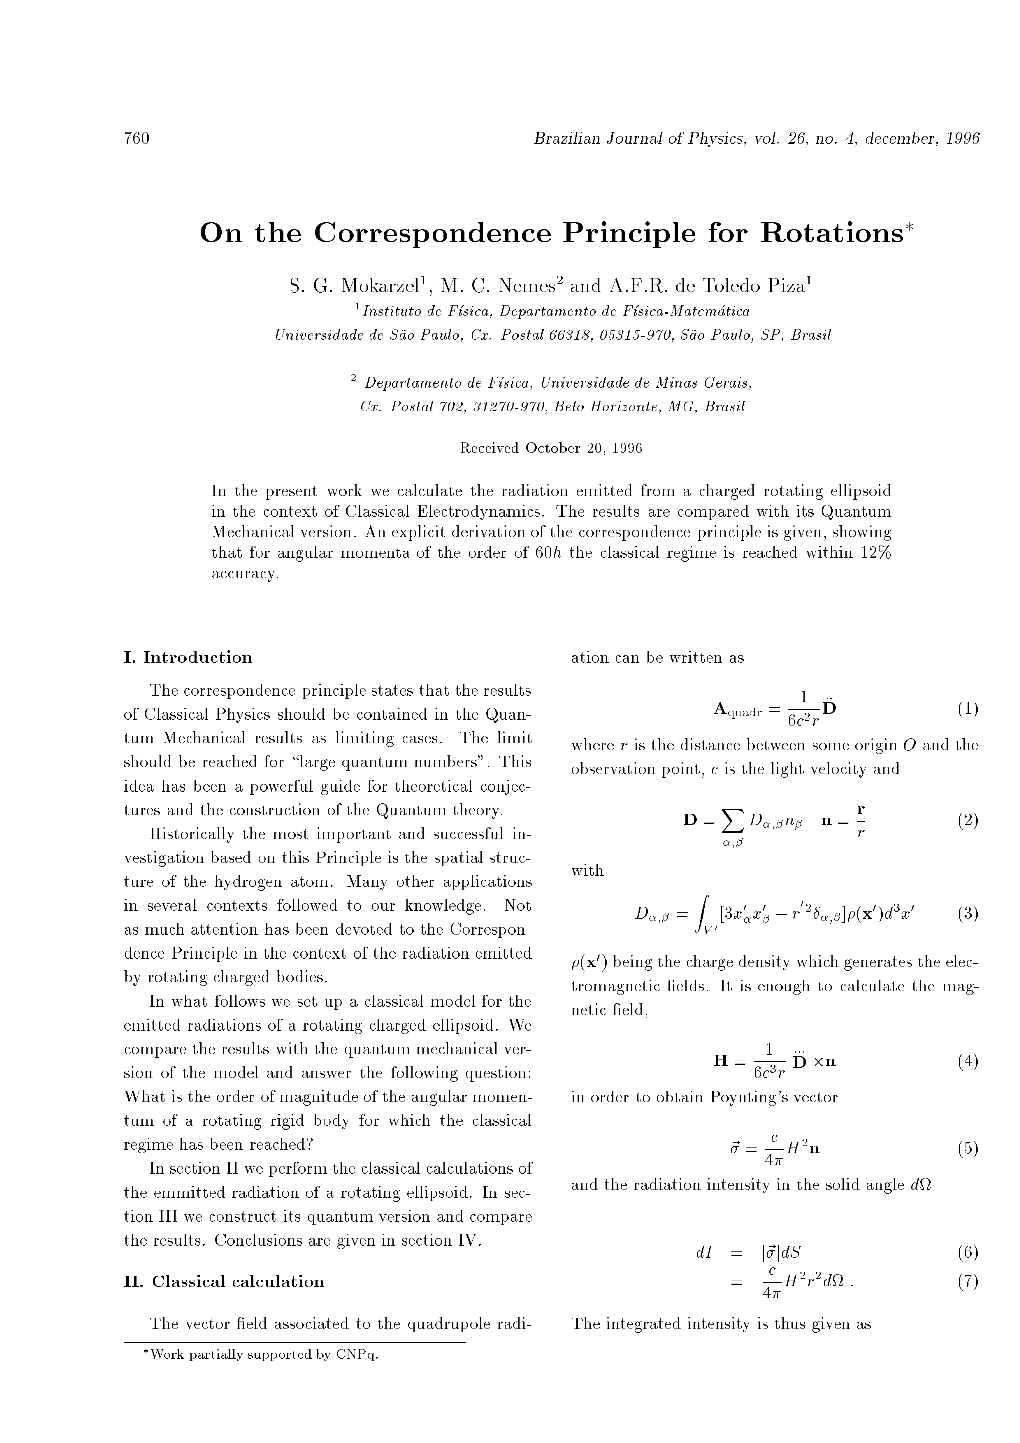 On the Correspondence Principle for Rotations